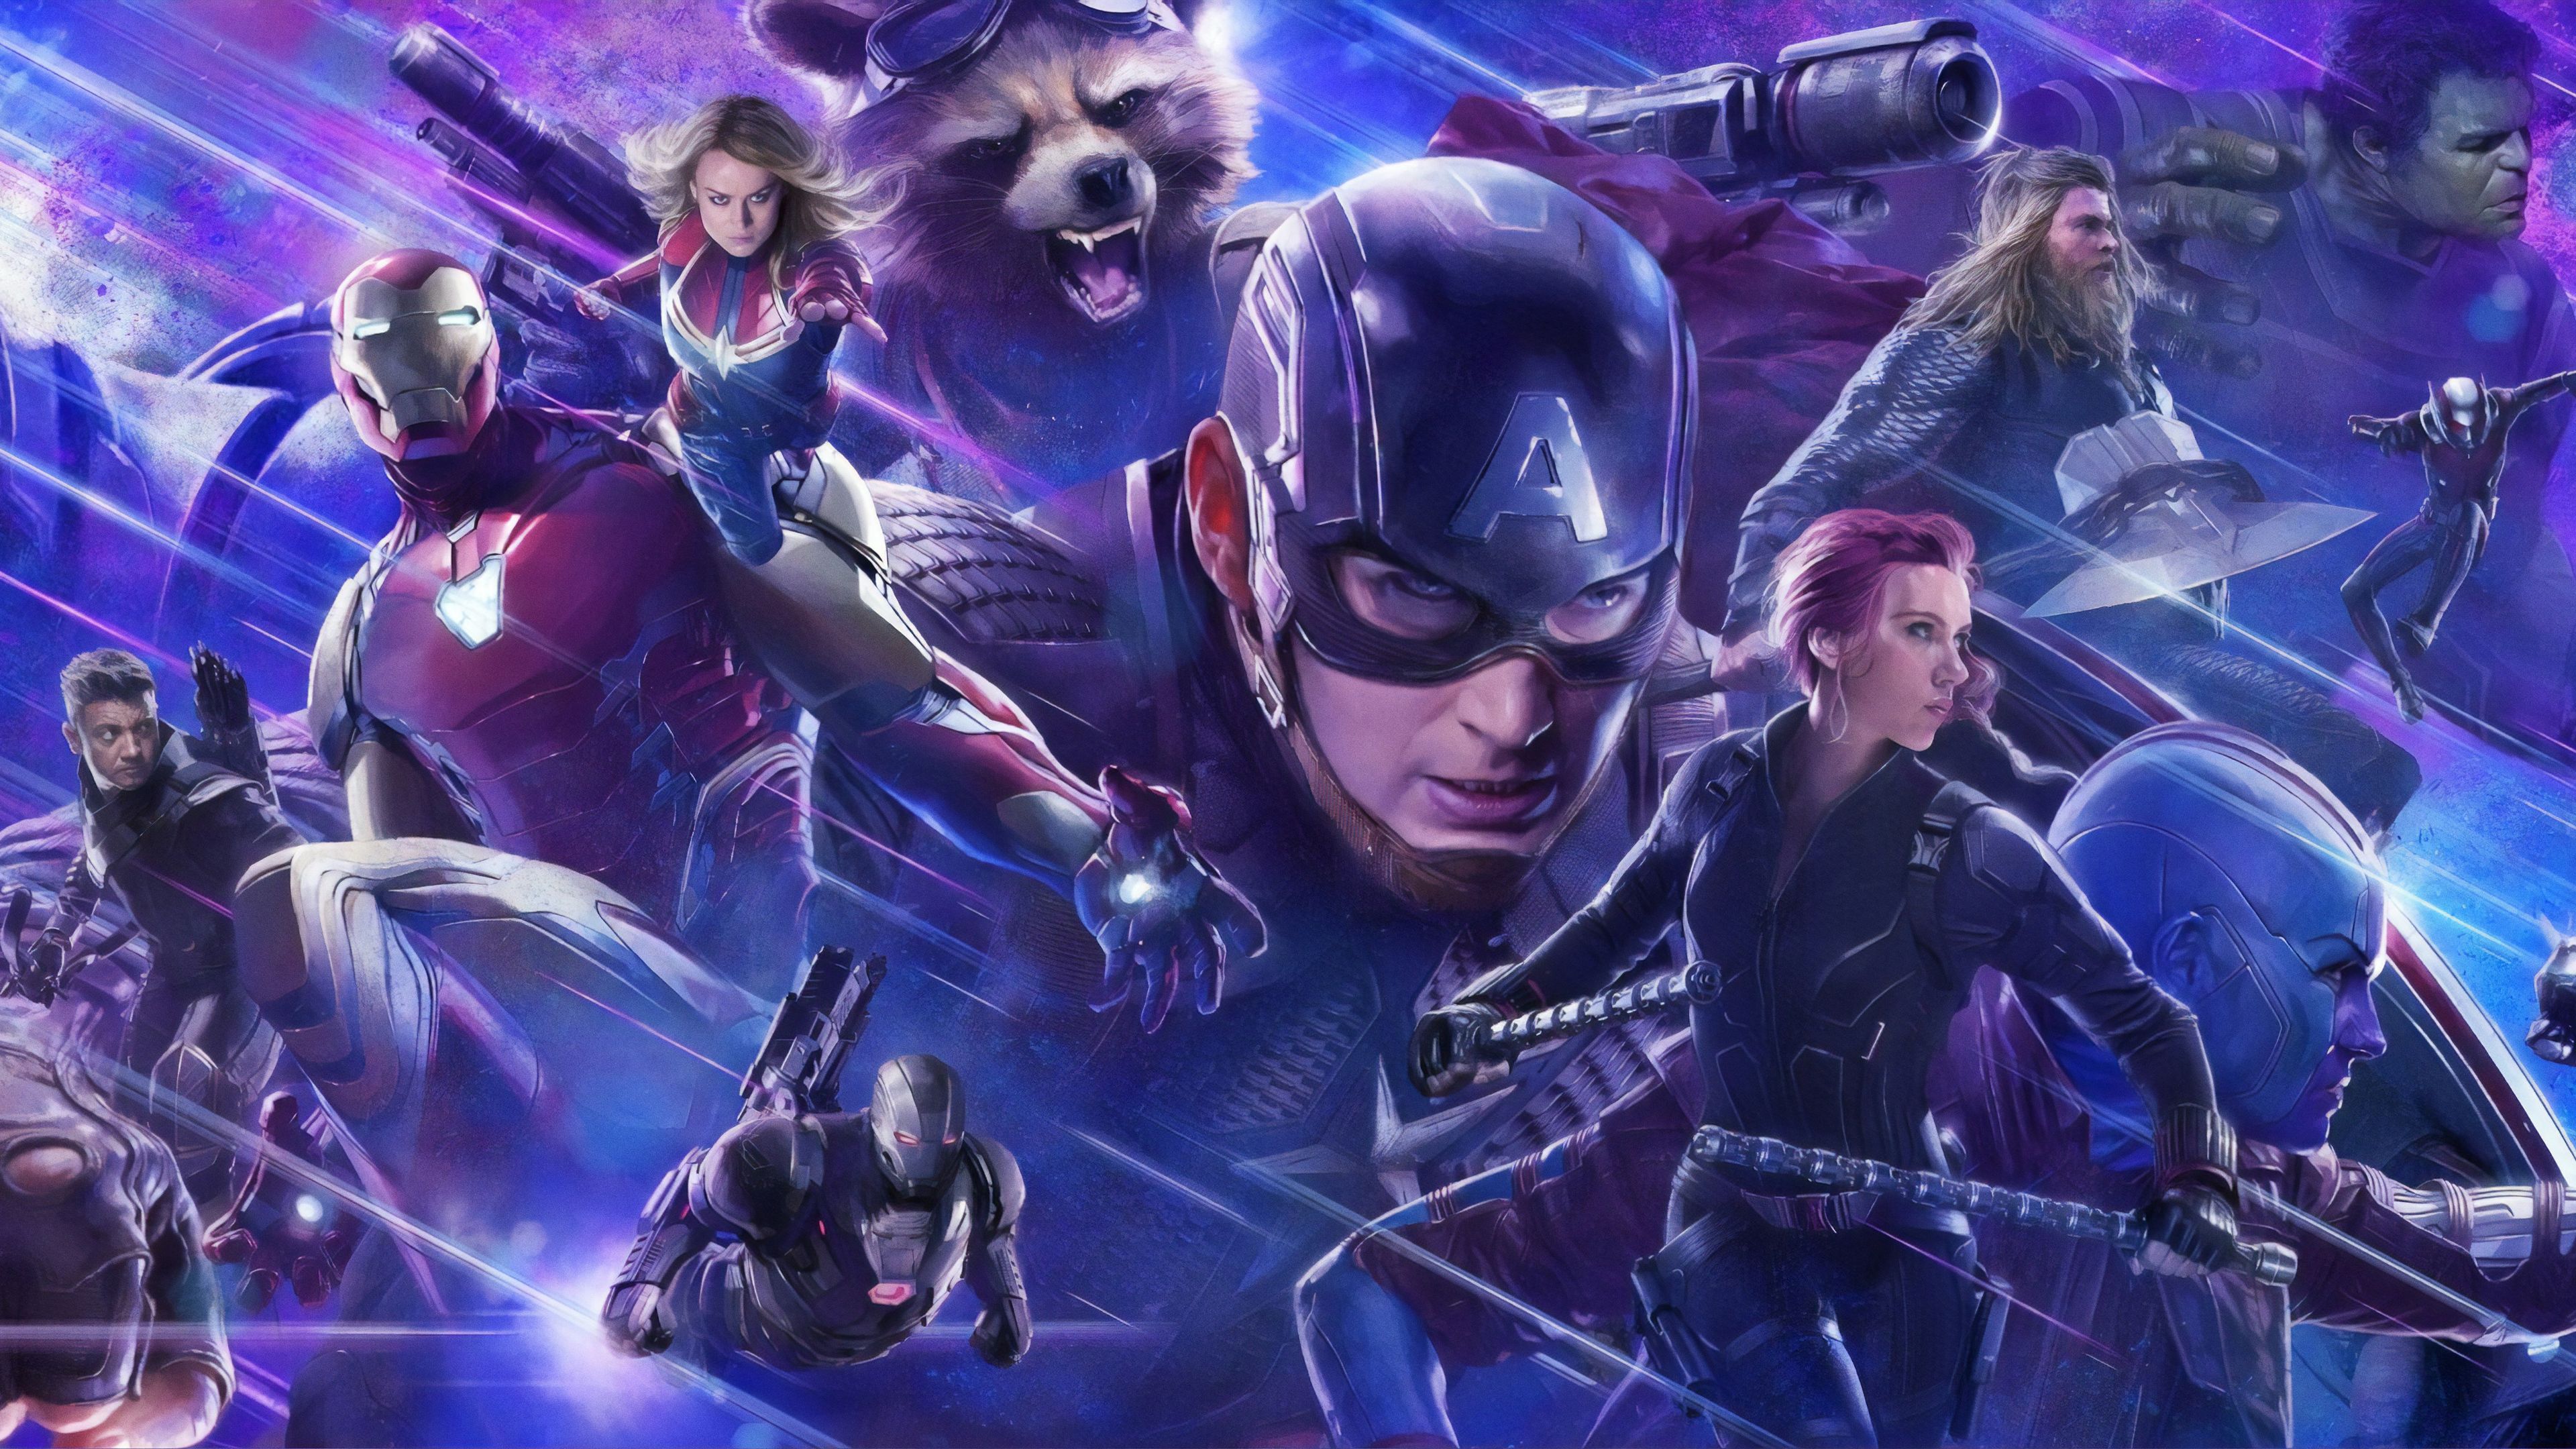 4k Avengers Endgame 2019 superheroes wallpaper, movies